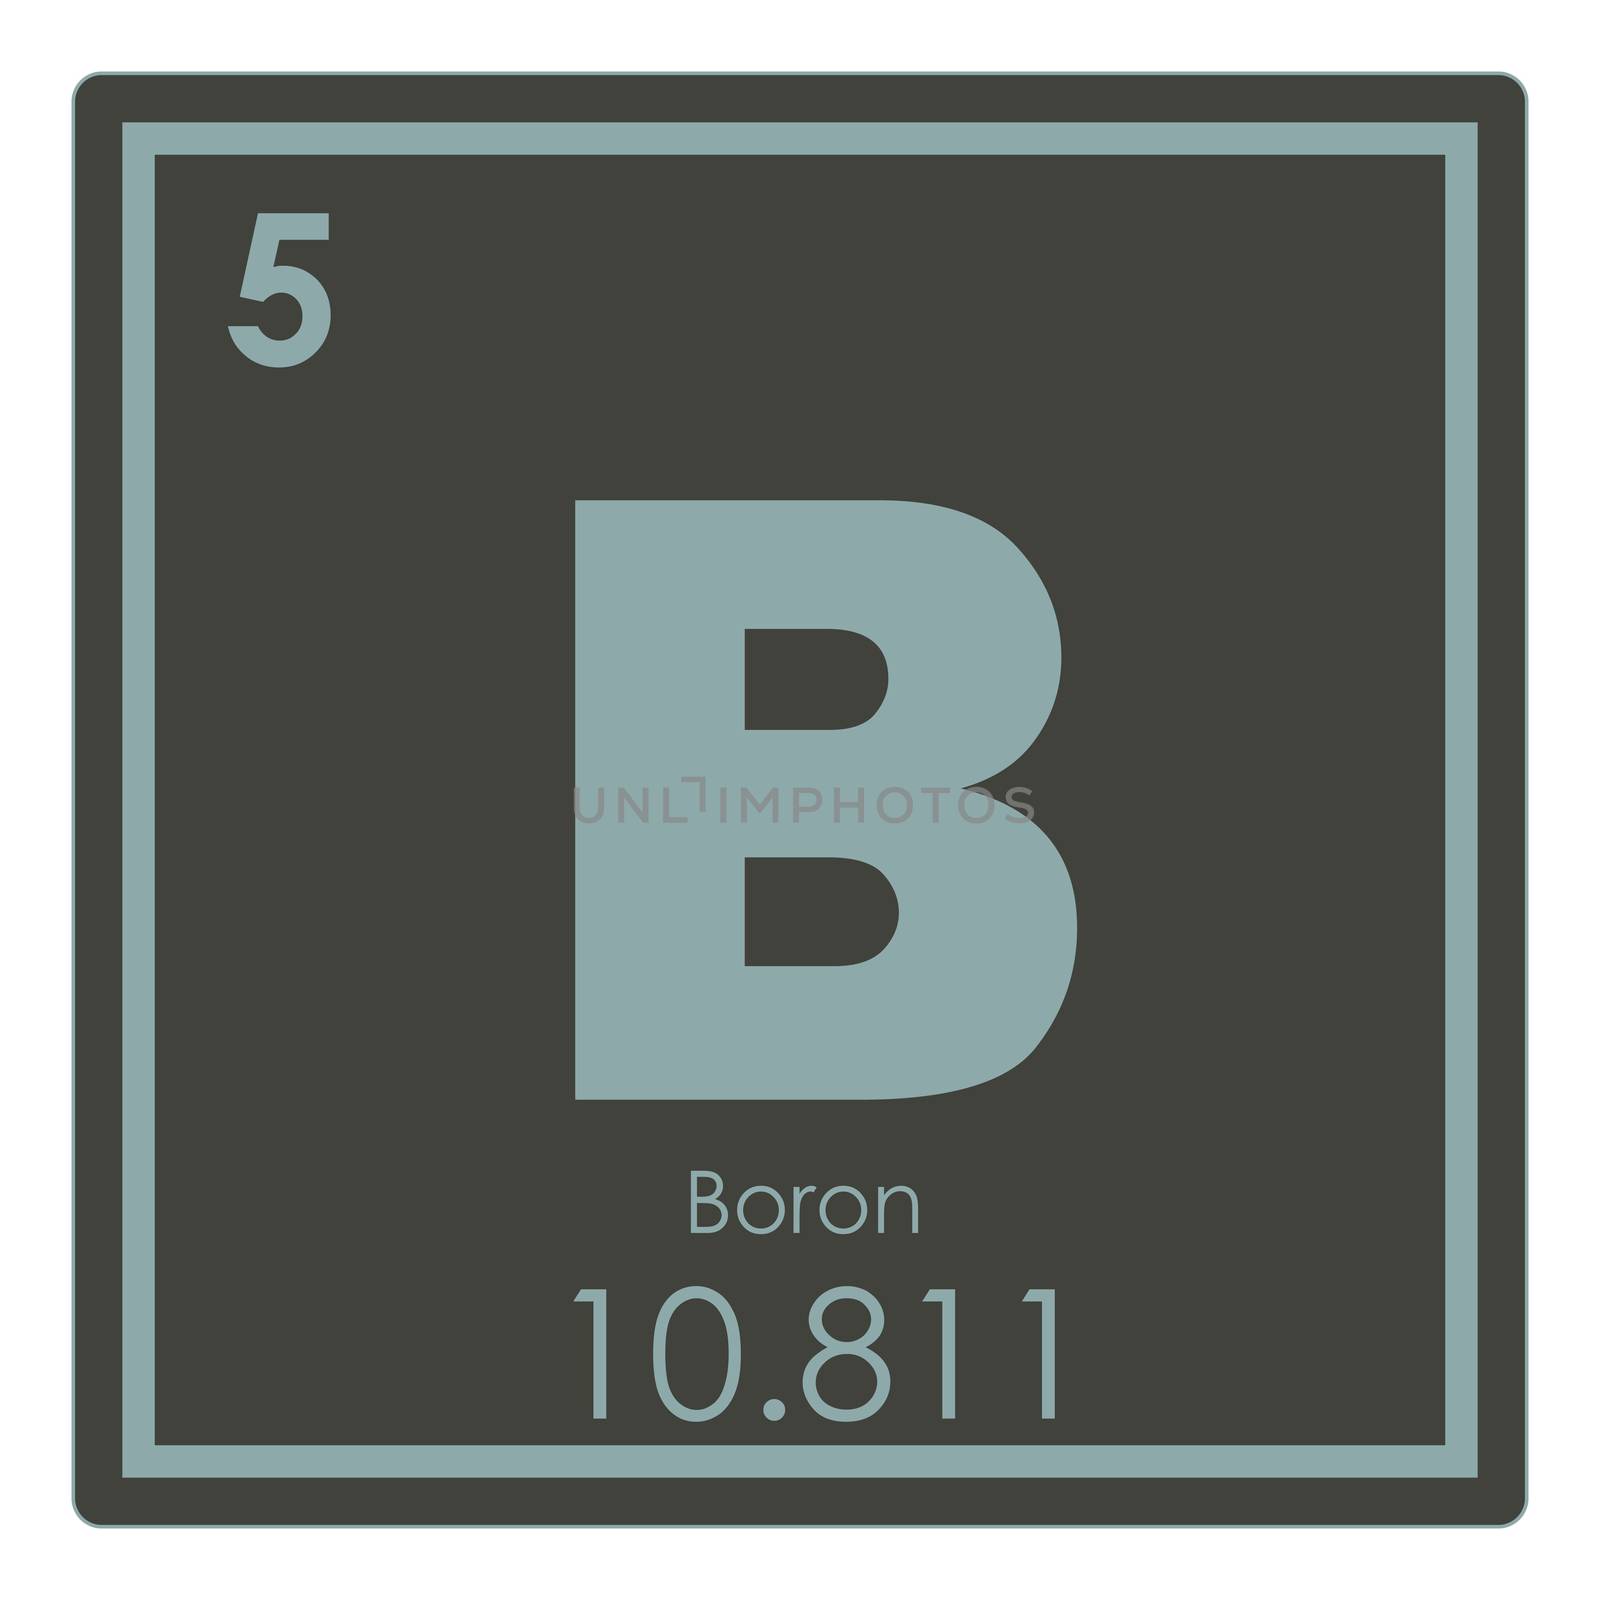 Boron chemical element periodic table science symbol